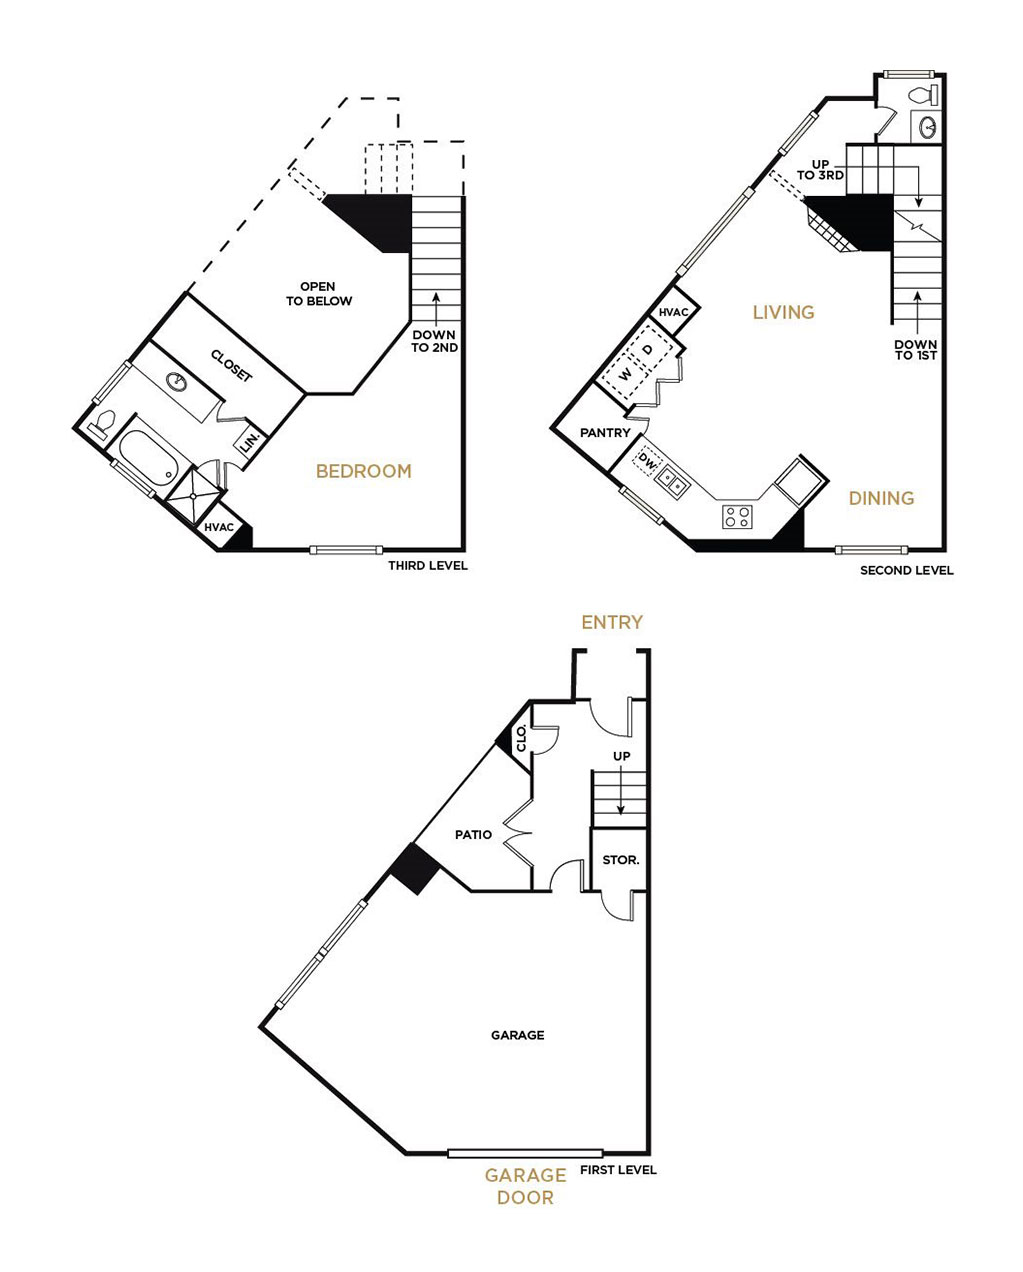 Brownstone A1 - 1 Bedroom Floorplan - Alto at Highland Park Apartments